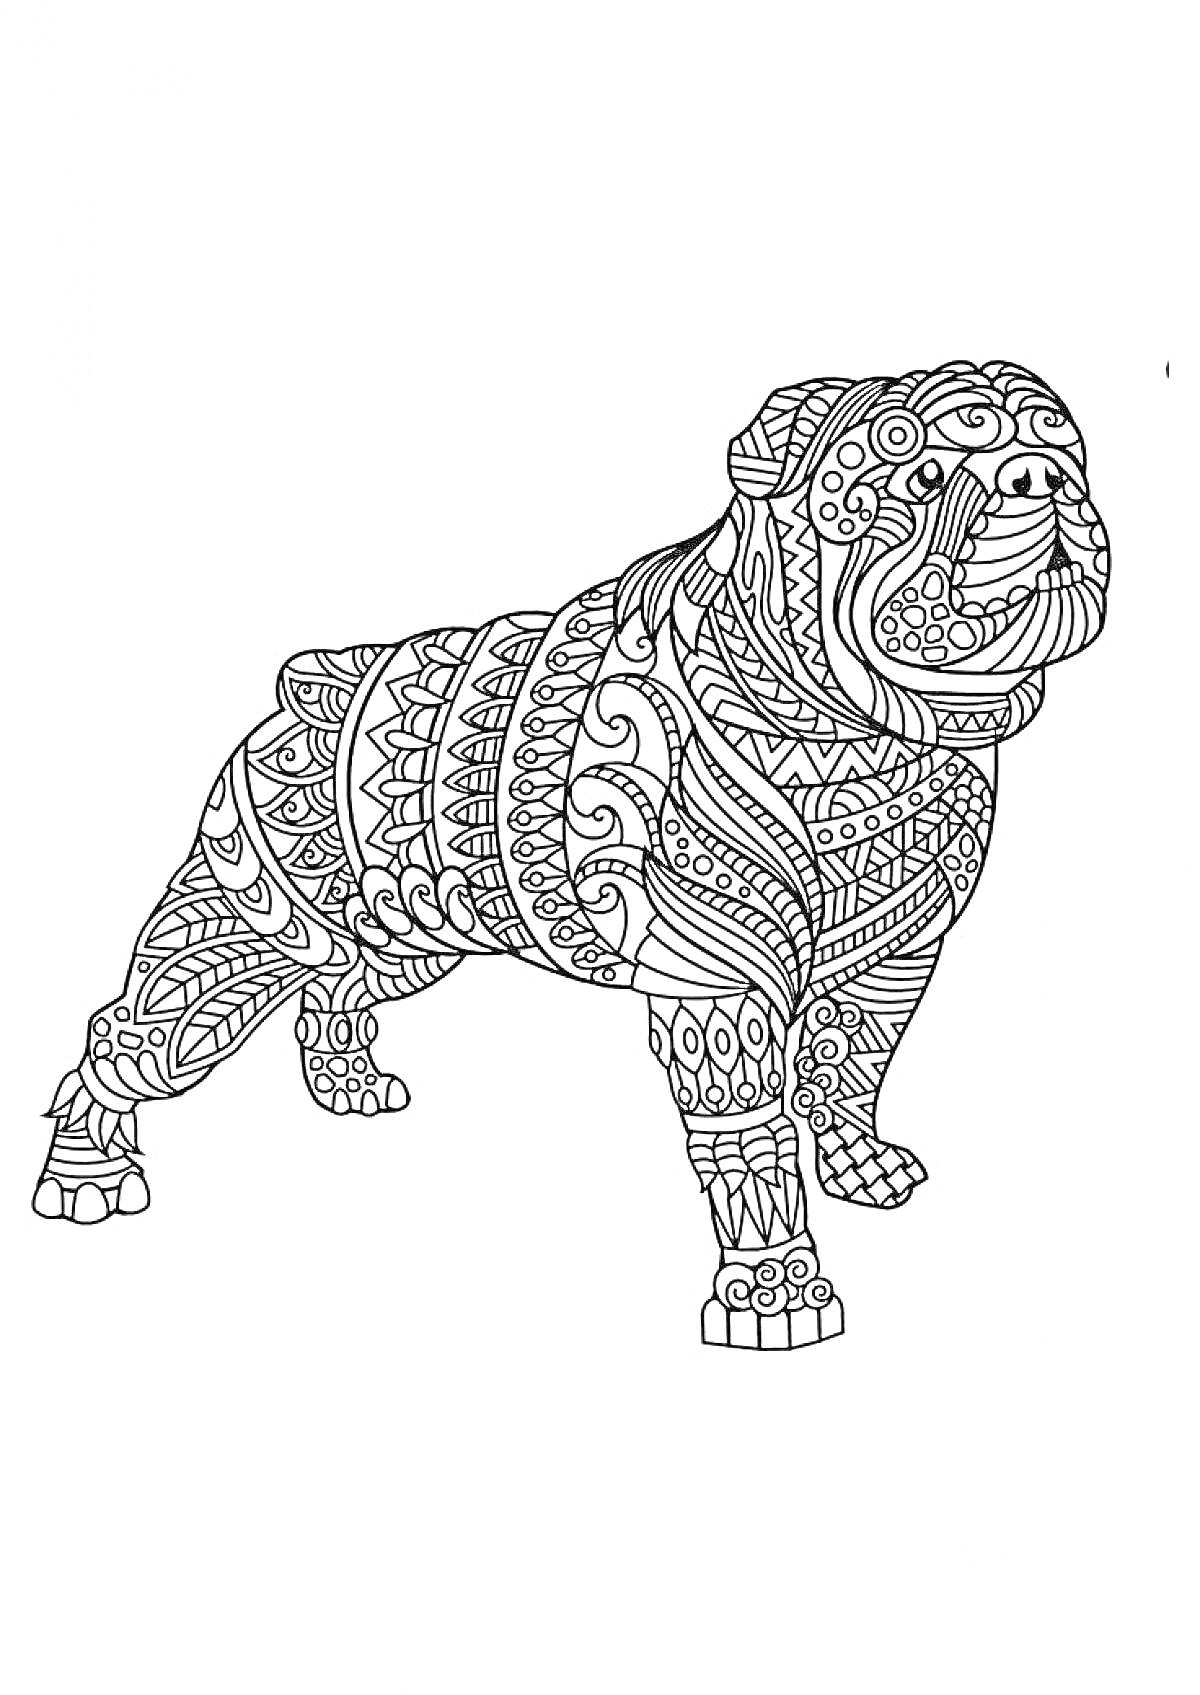 Раскраска Антистресс раскраска собака в орнаменте